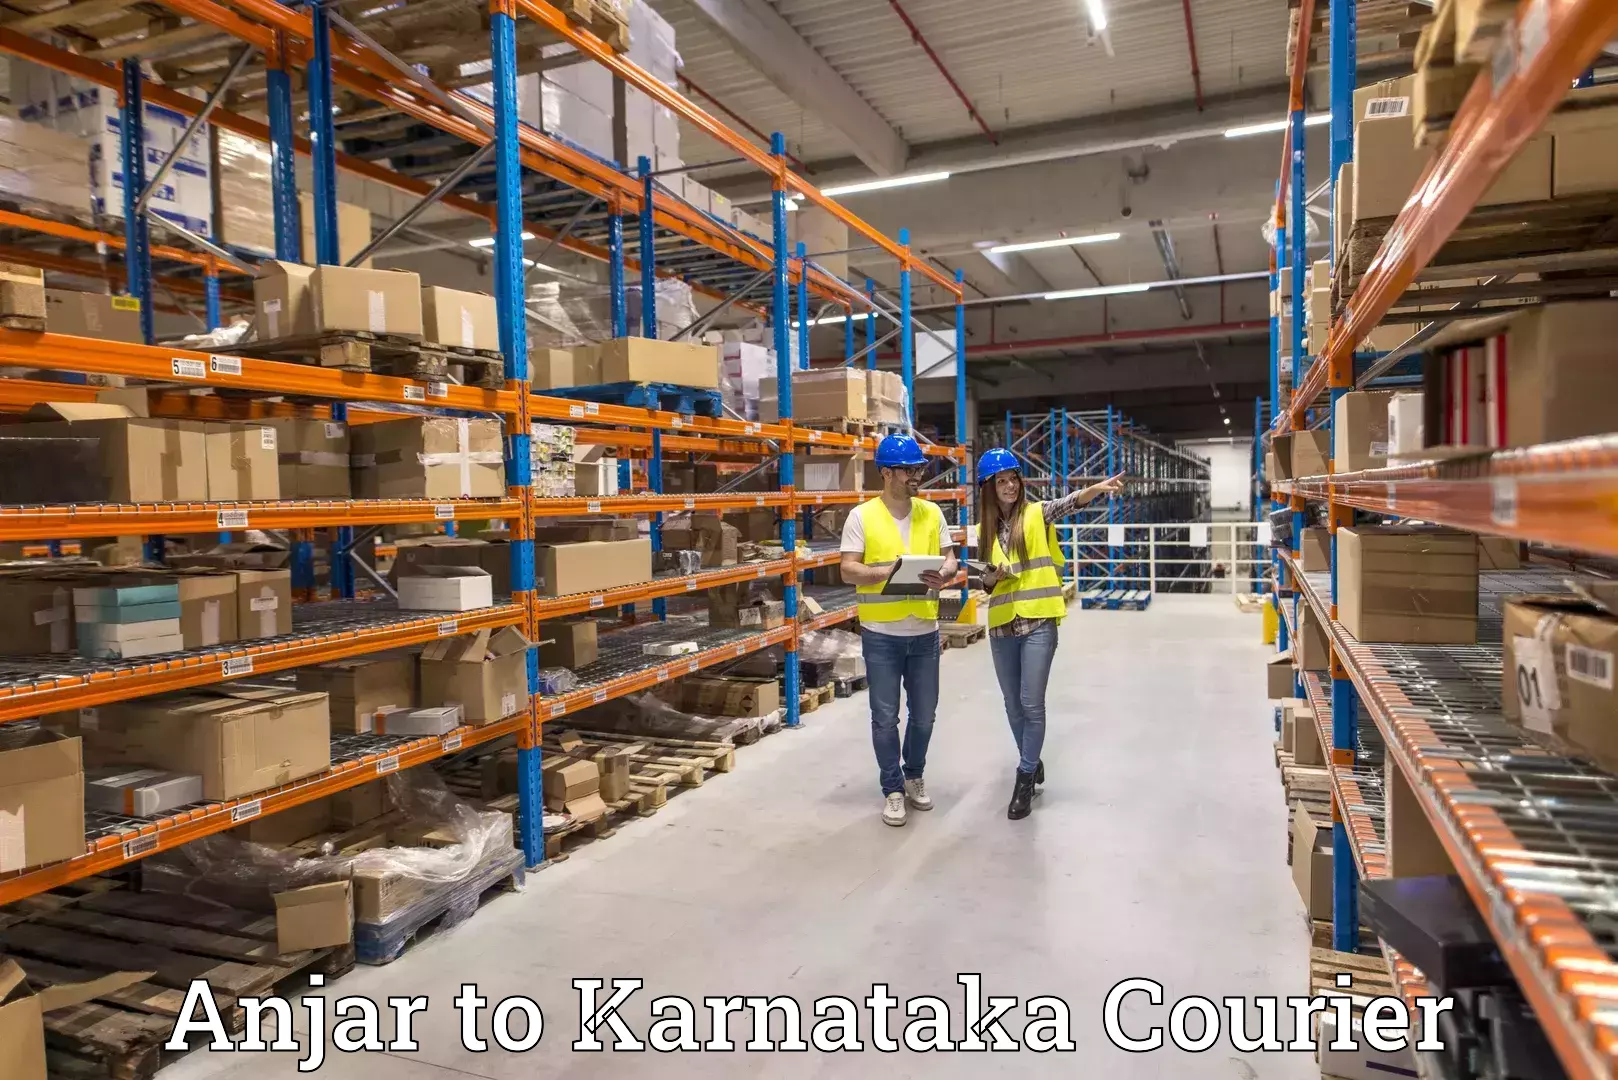 Cash on delivery service Anjar to Karnataka